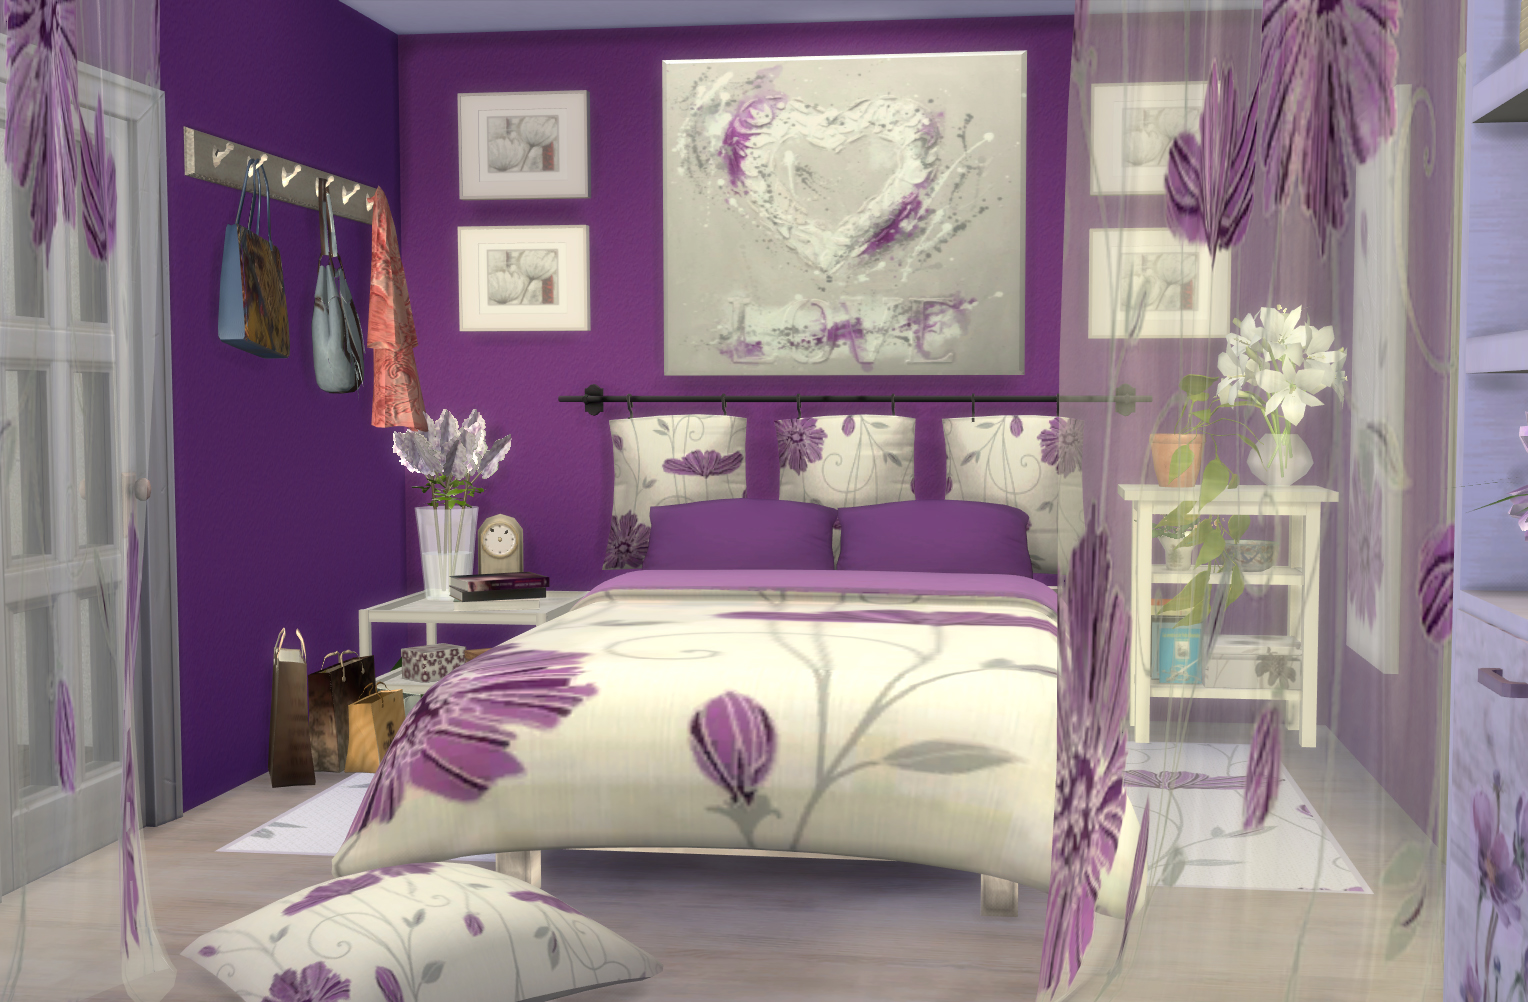 sims bedroom furniture set